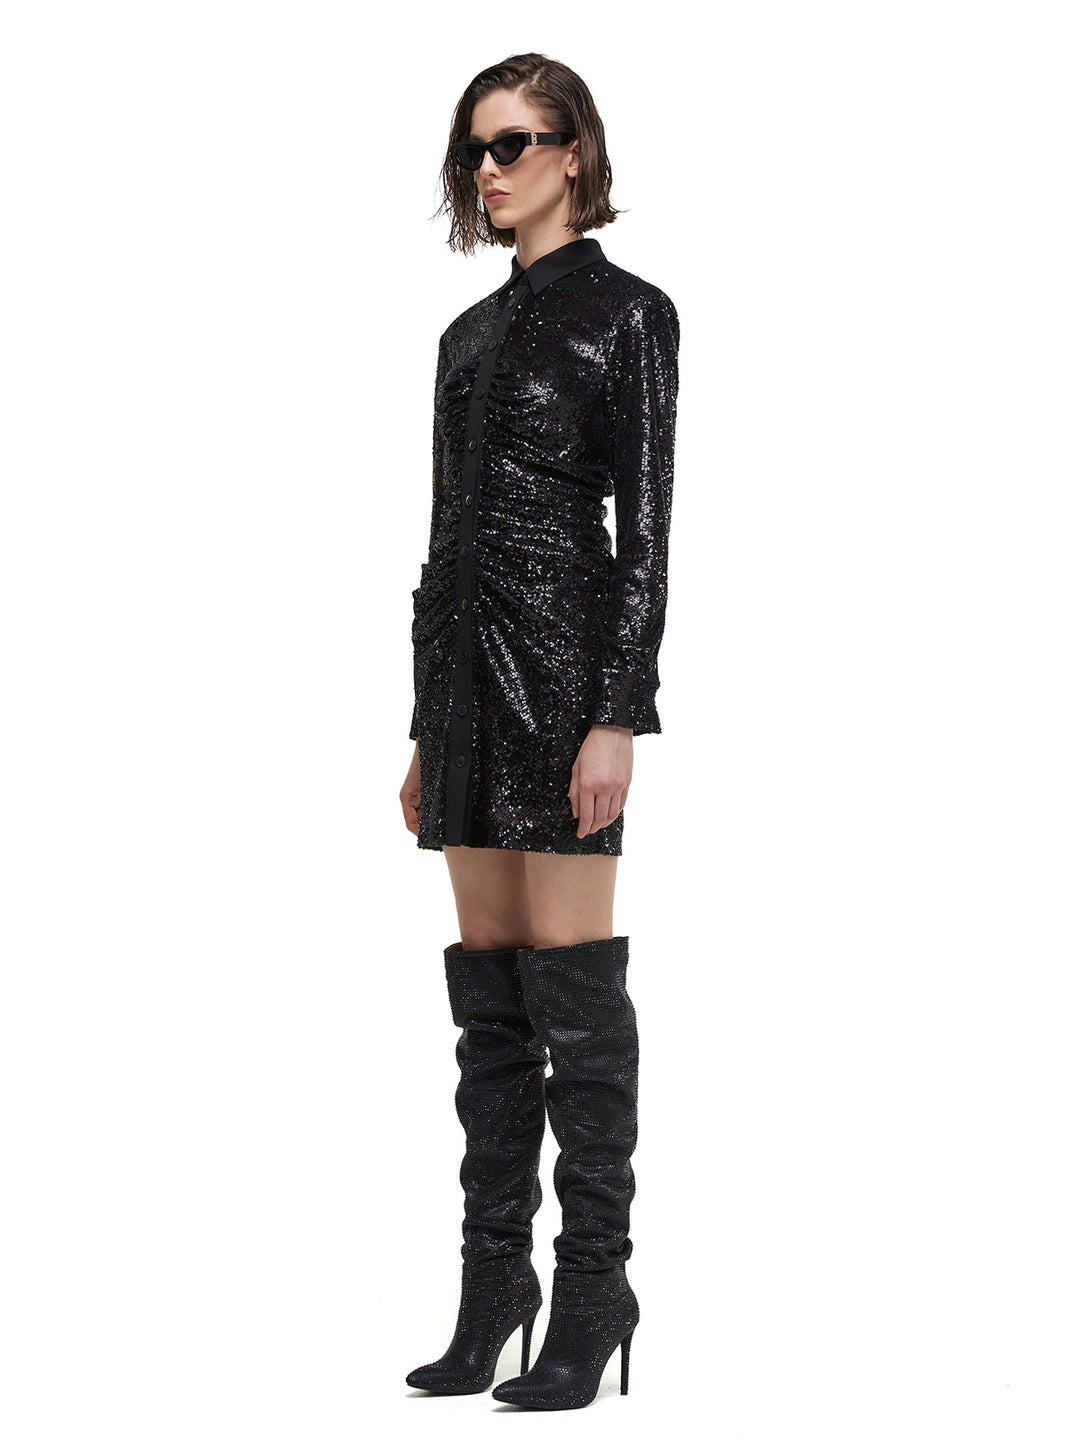 Futuristic Black Sequin Shirt Dress